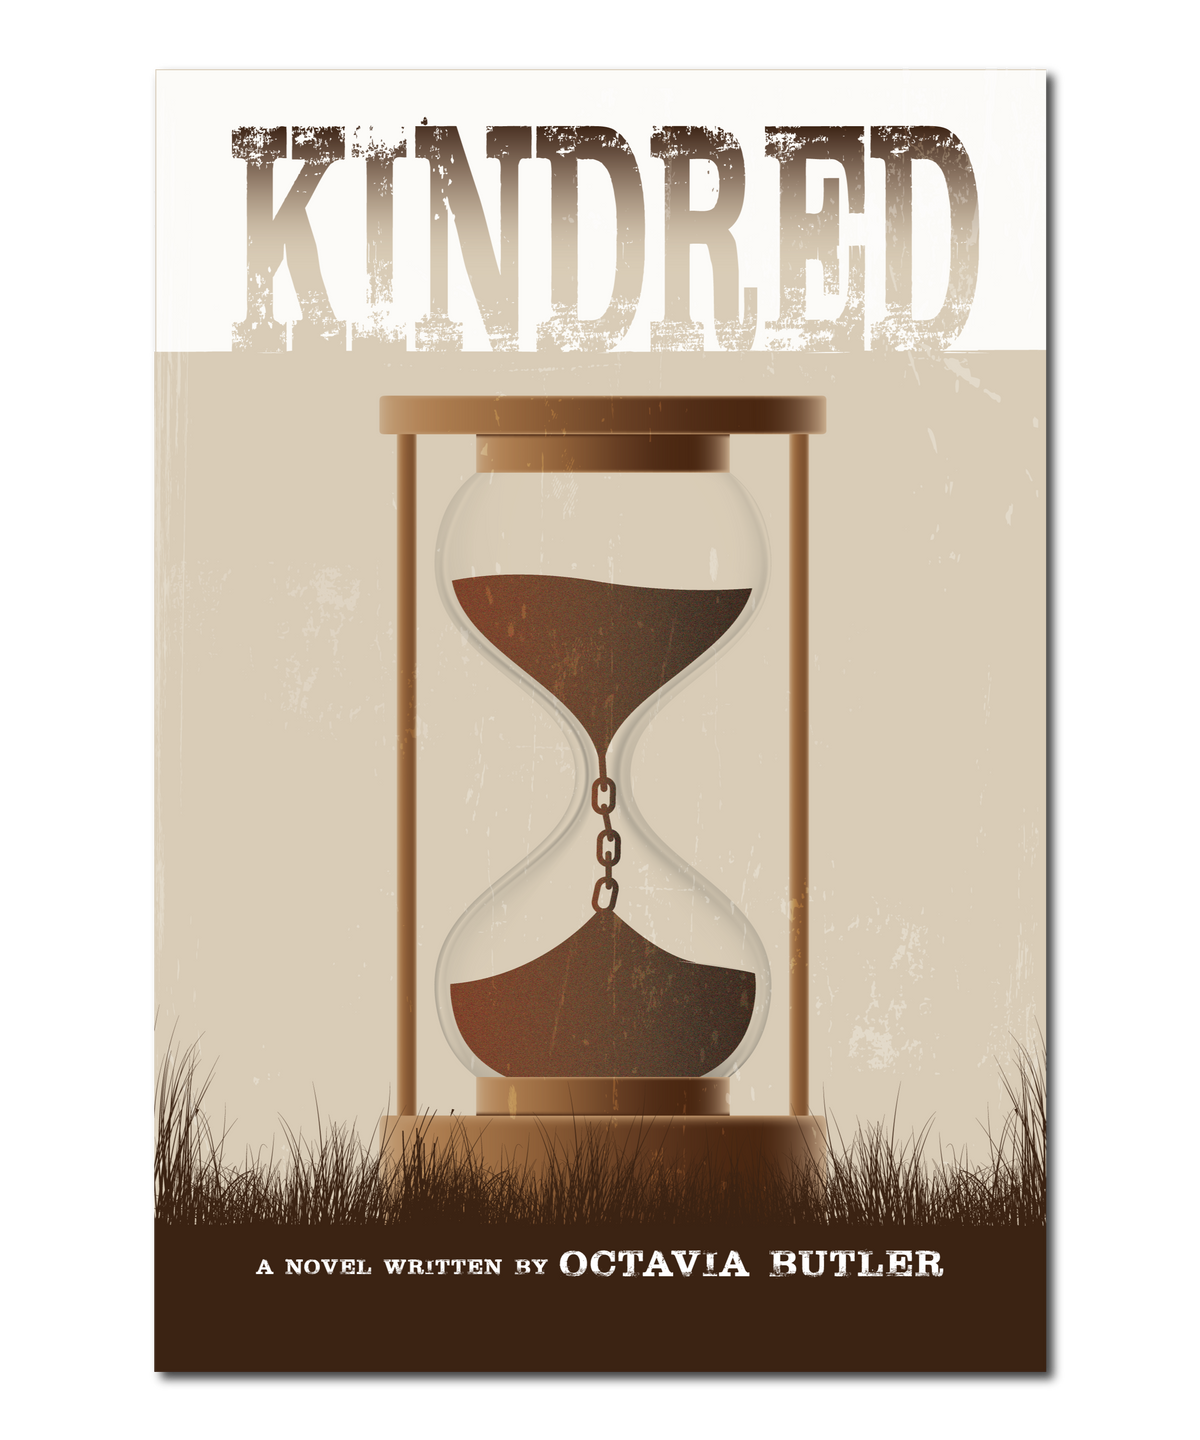 Original Print Reinterpretation of the classic novel, "Kindred" (by Octavia Butler)